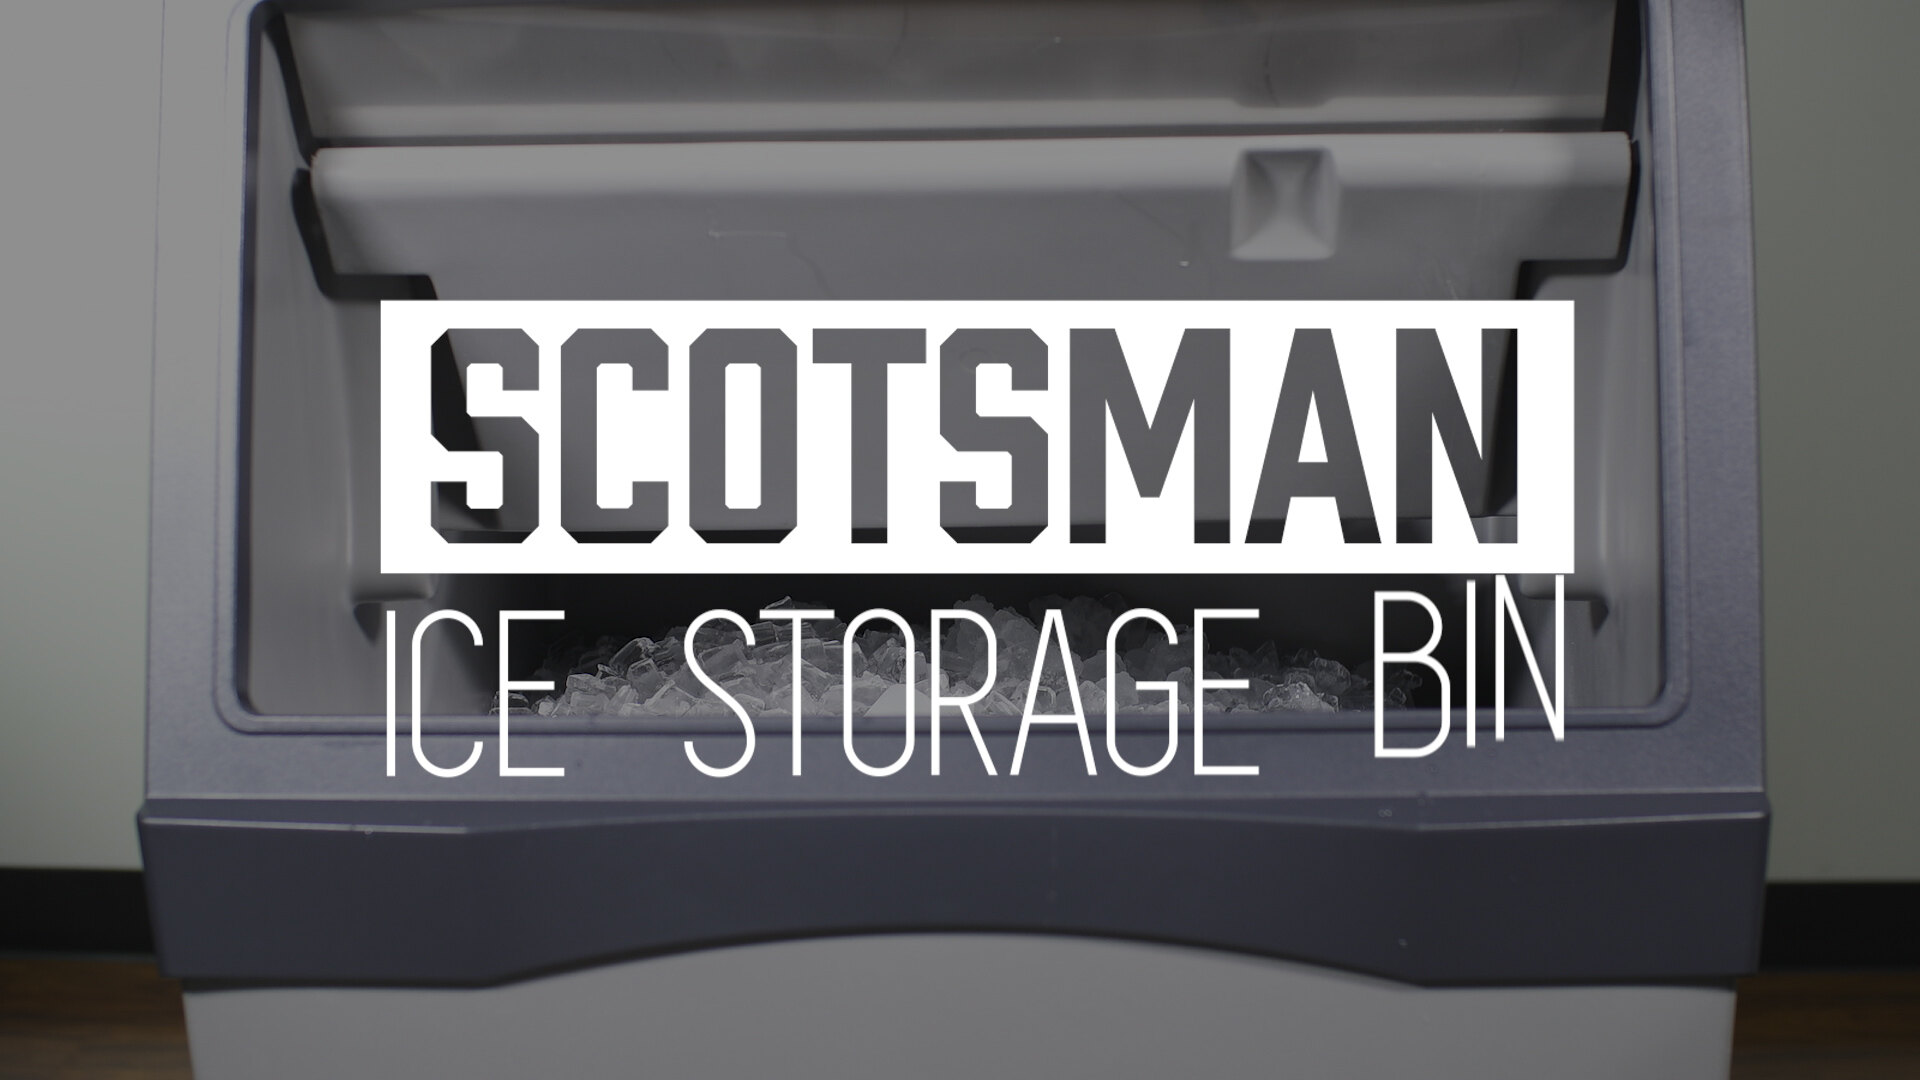 Scotsman BL1360S 60 1320 lb Ice Storage Bin